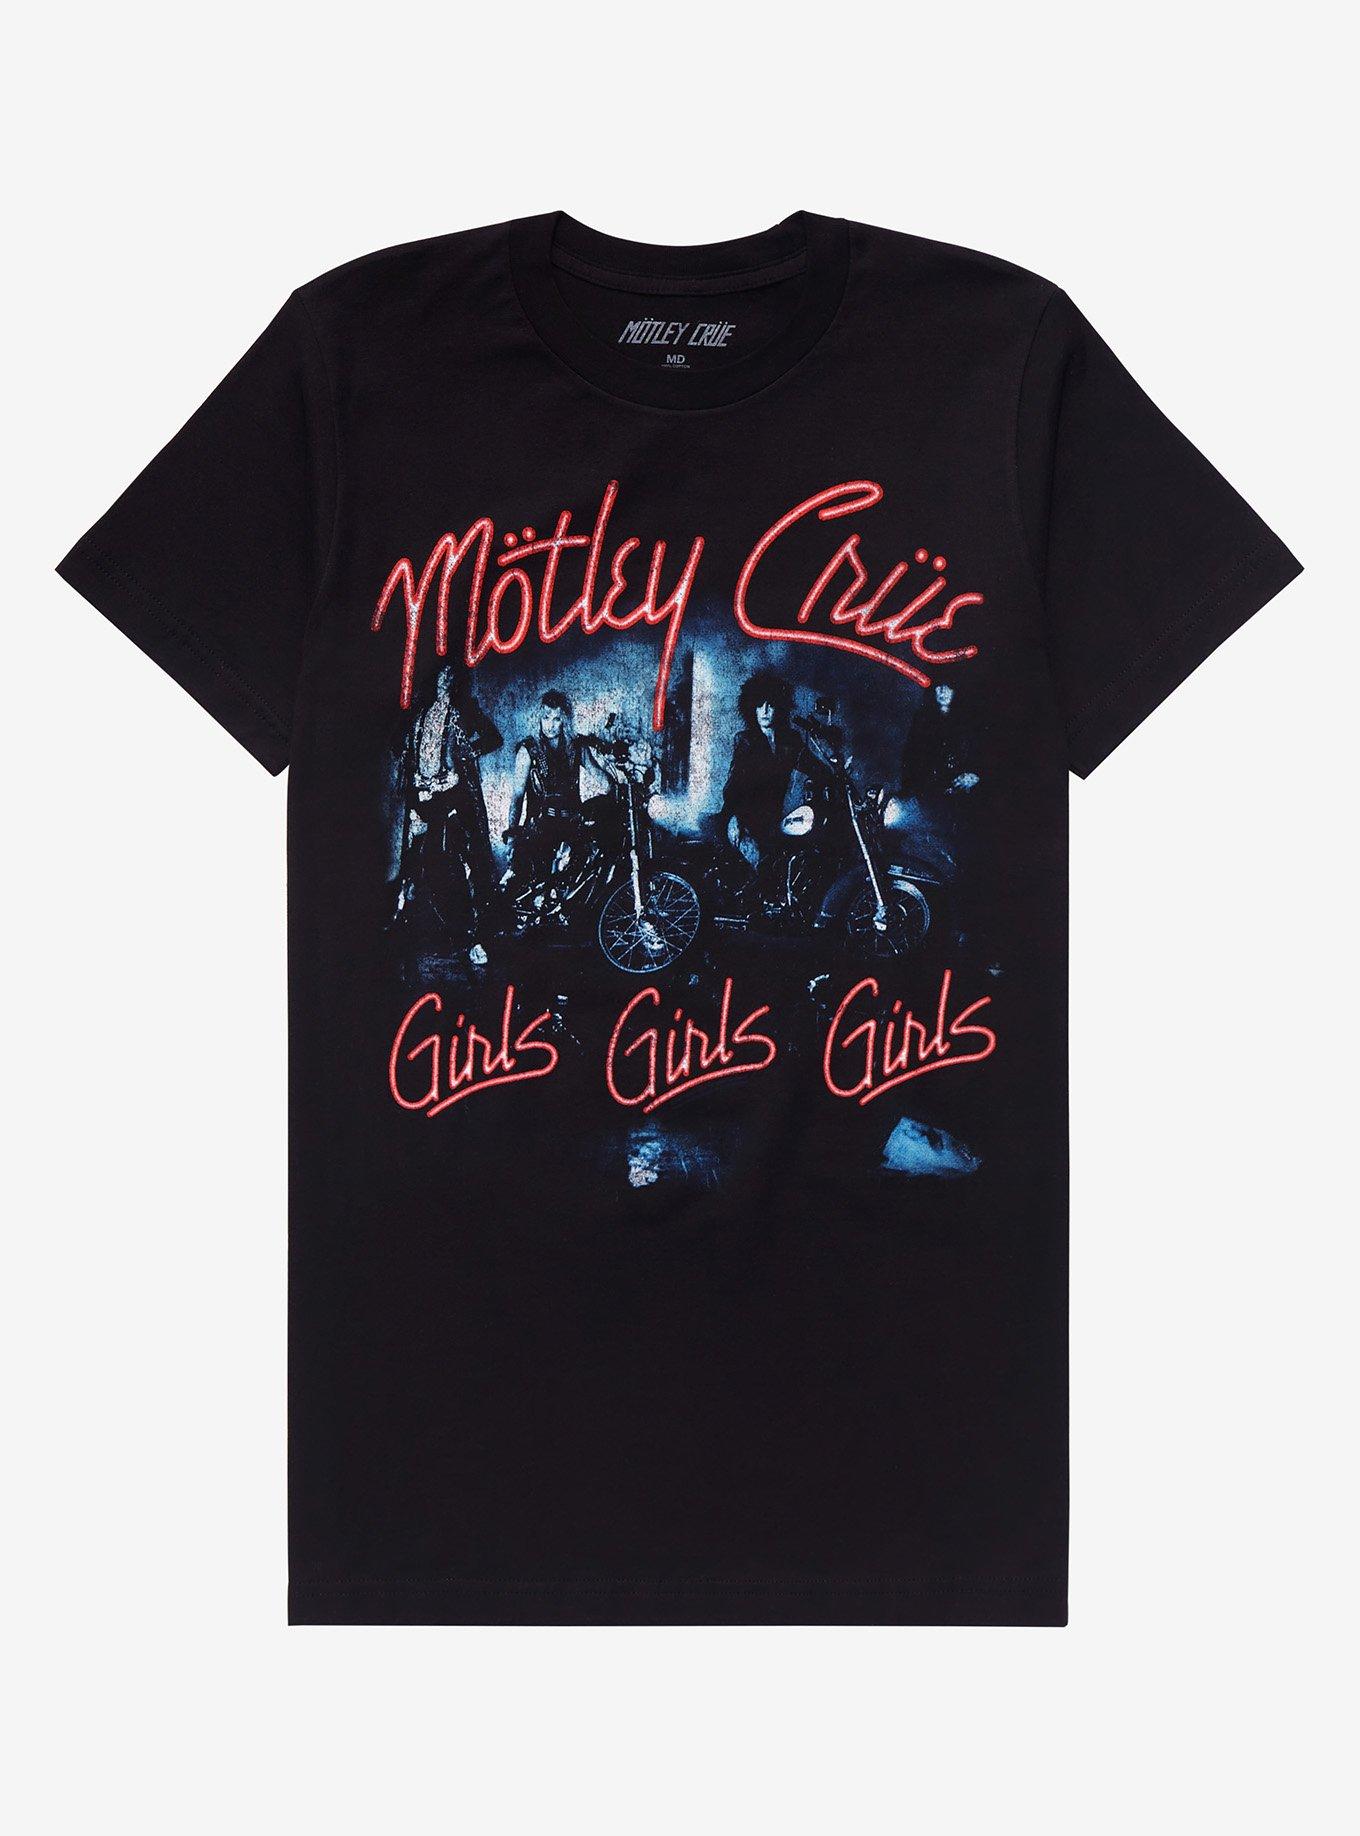 Motley Crue Girls Girls Girls Tracklisting Girls T-Shirt, BLACK, hi-res